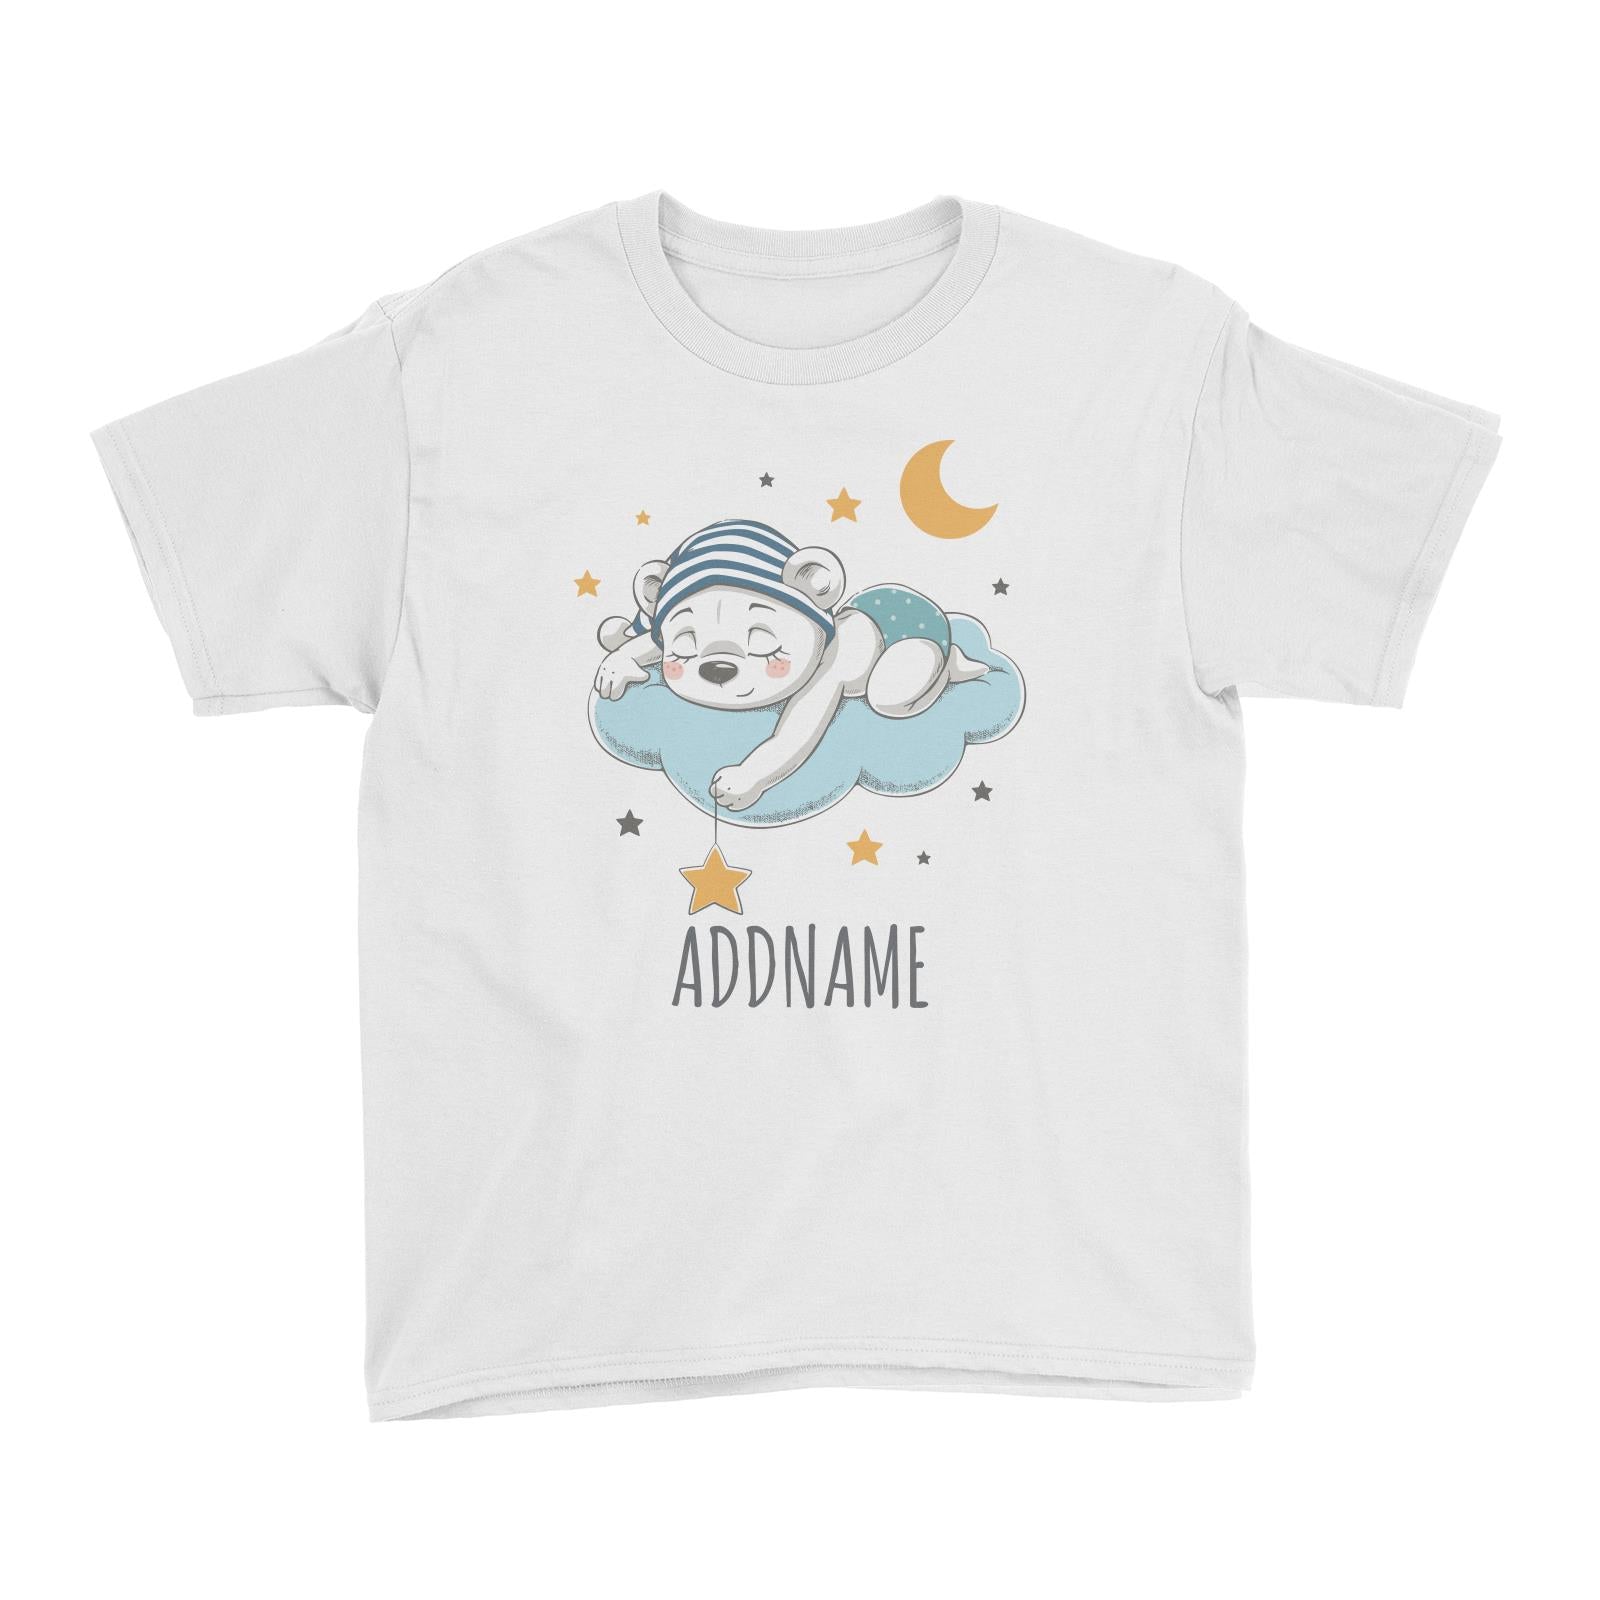 Sleeping Boy Bear on Cloud White Kid's T-Shirt Personalizable Designs Cute Sweet Animal For Boys Newborn HG